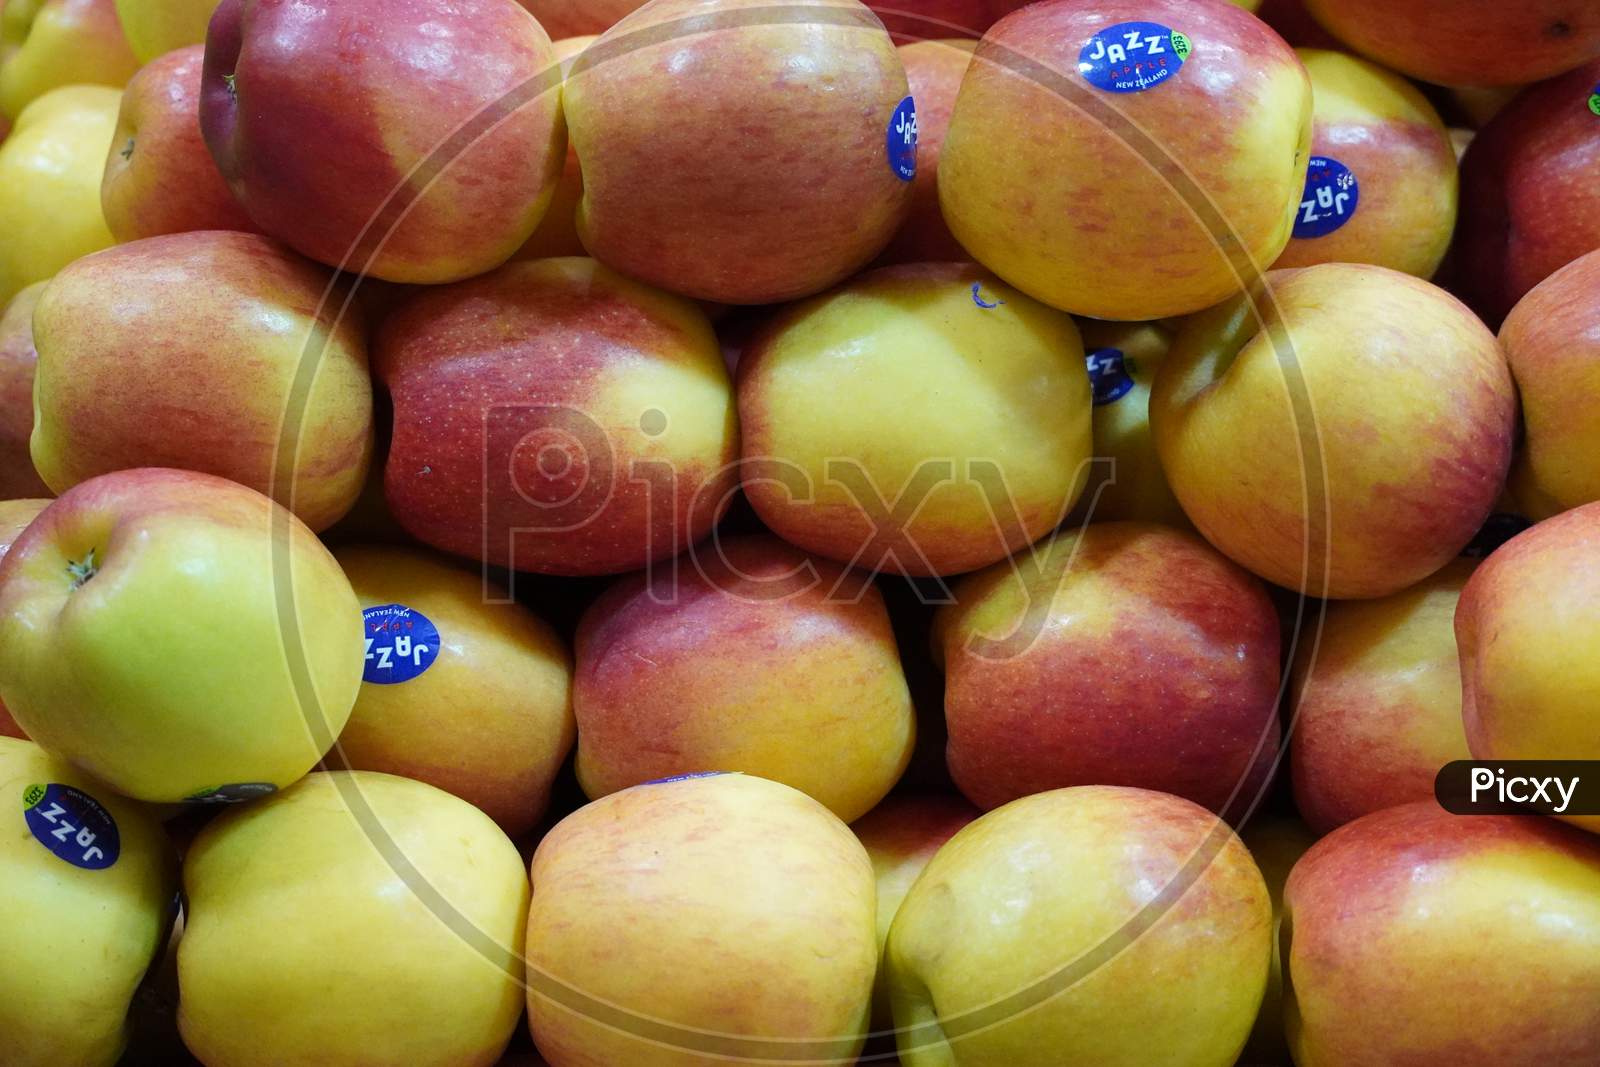 Dubai Uae - November 2019: Bunch Of Apples In Supermarket. Apple Put On Sale Shelves In The Supermarket. Fresh Ripe Apples Displayed Beautifully.